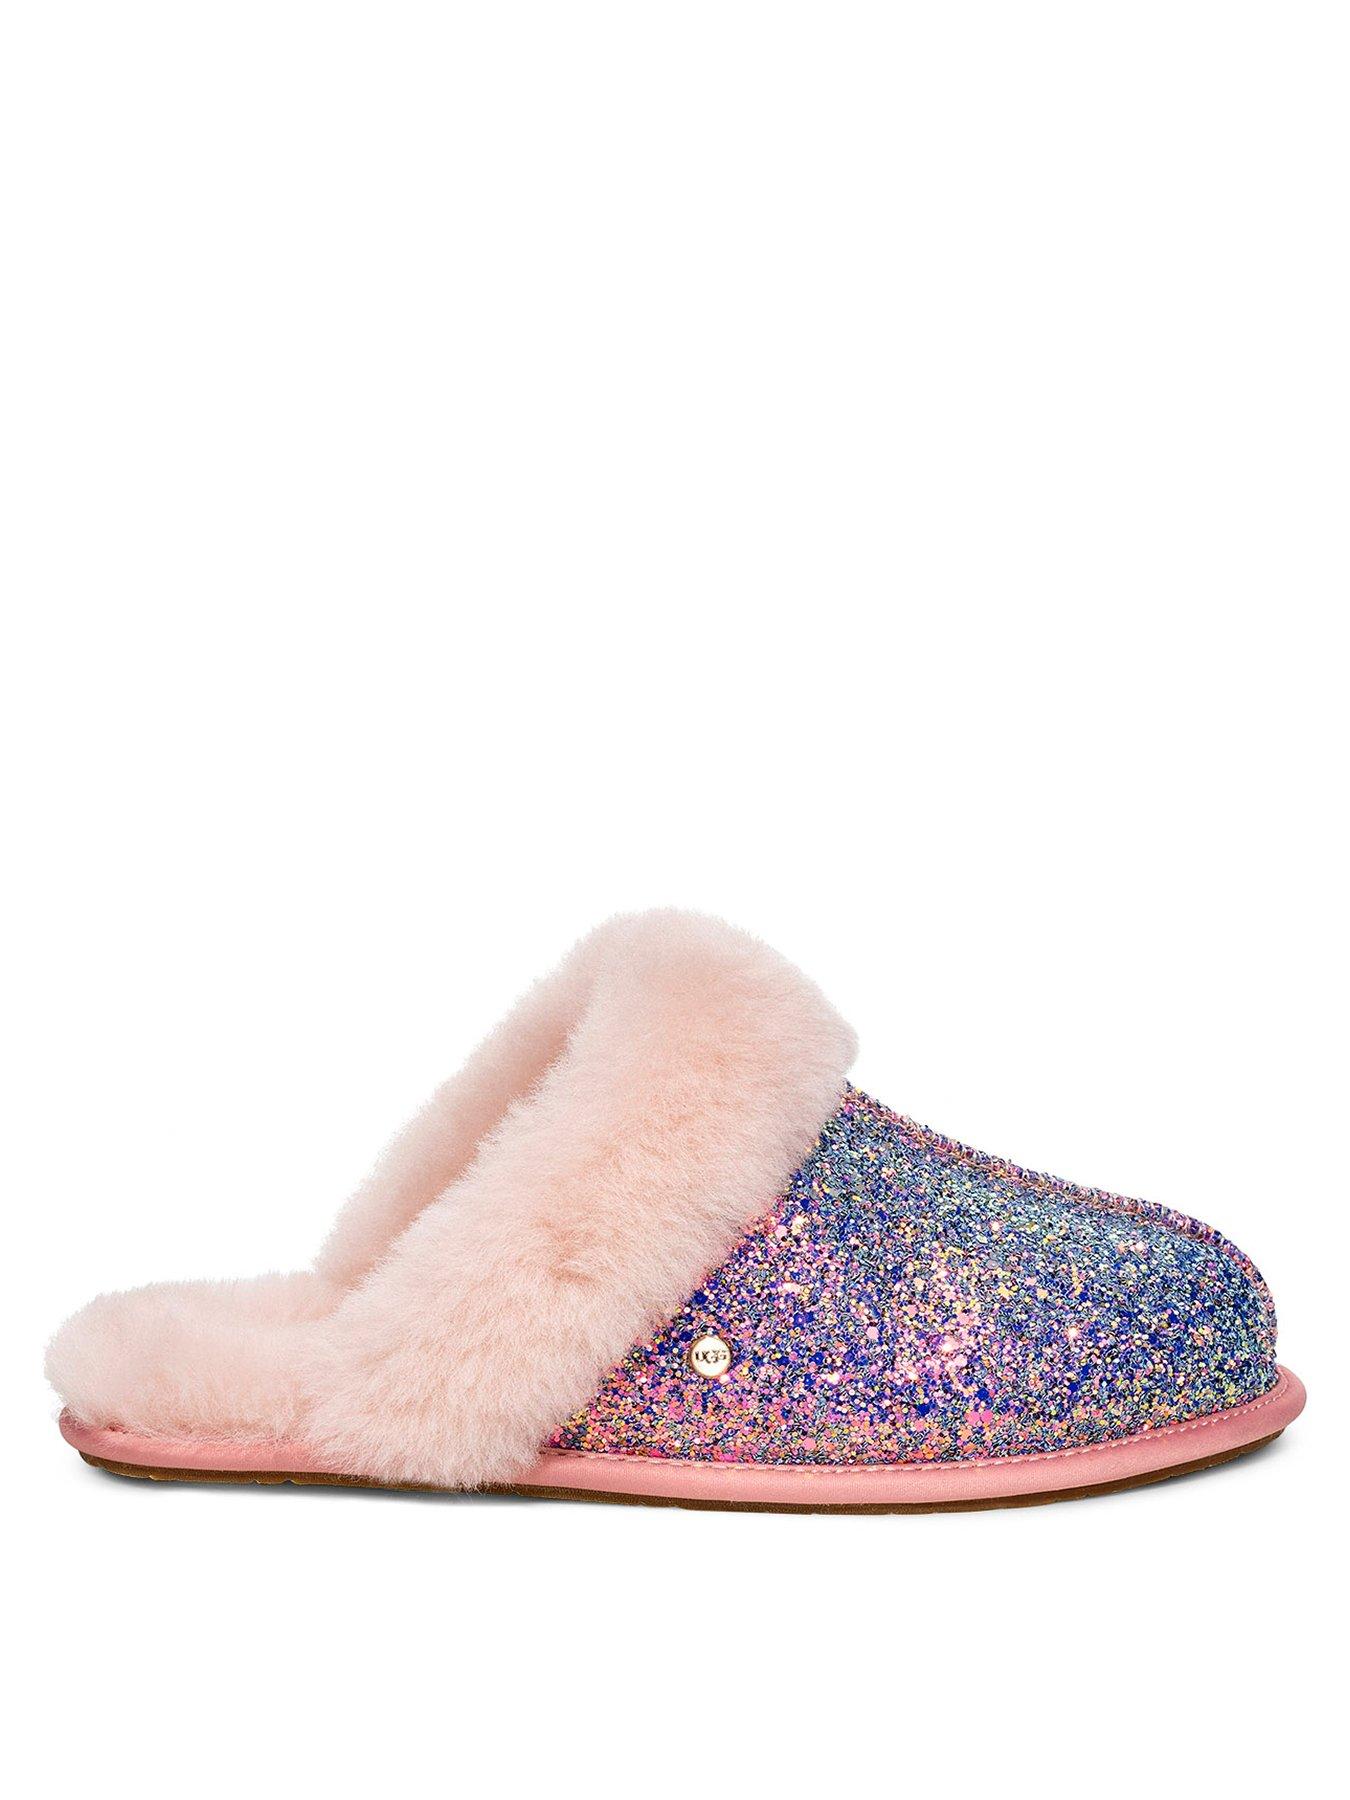 ugg slippers sale womens uk